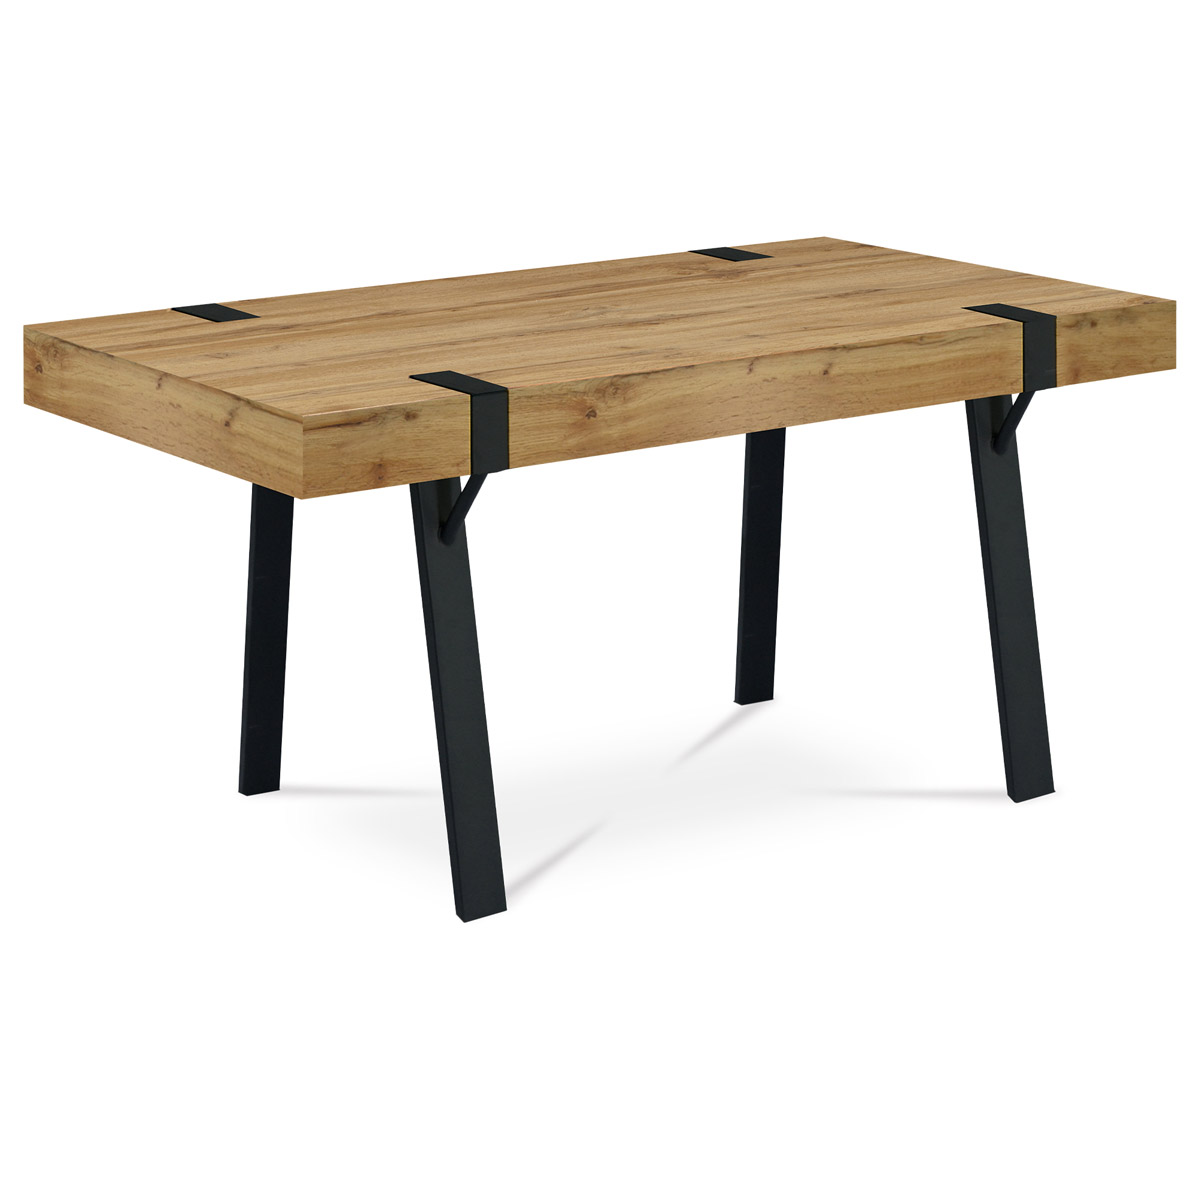 Jedálenský stôl 160x90x75 cm, doska MDF tl. 100 mm, 3D dekor divoký dub, kov čierny mat